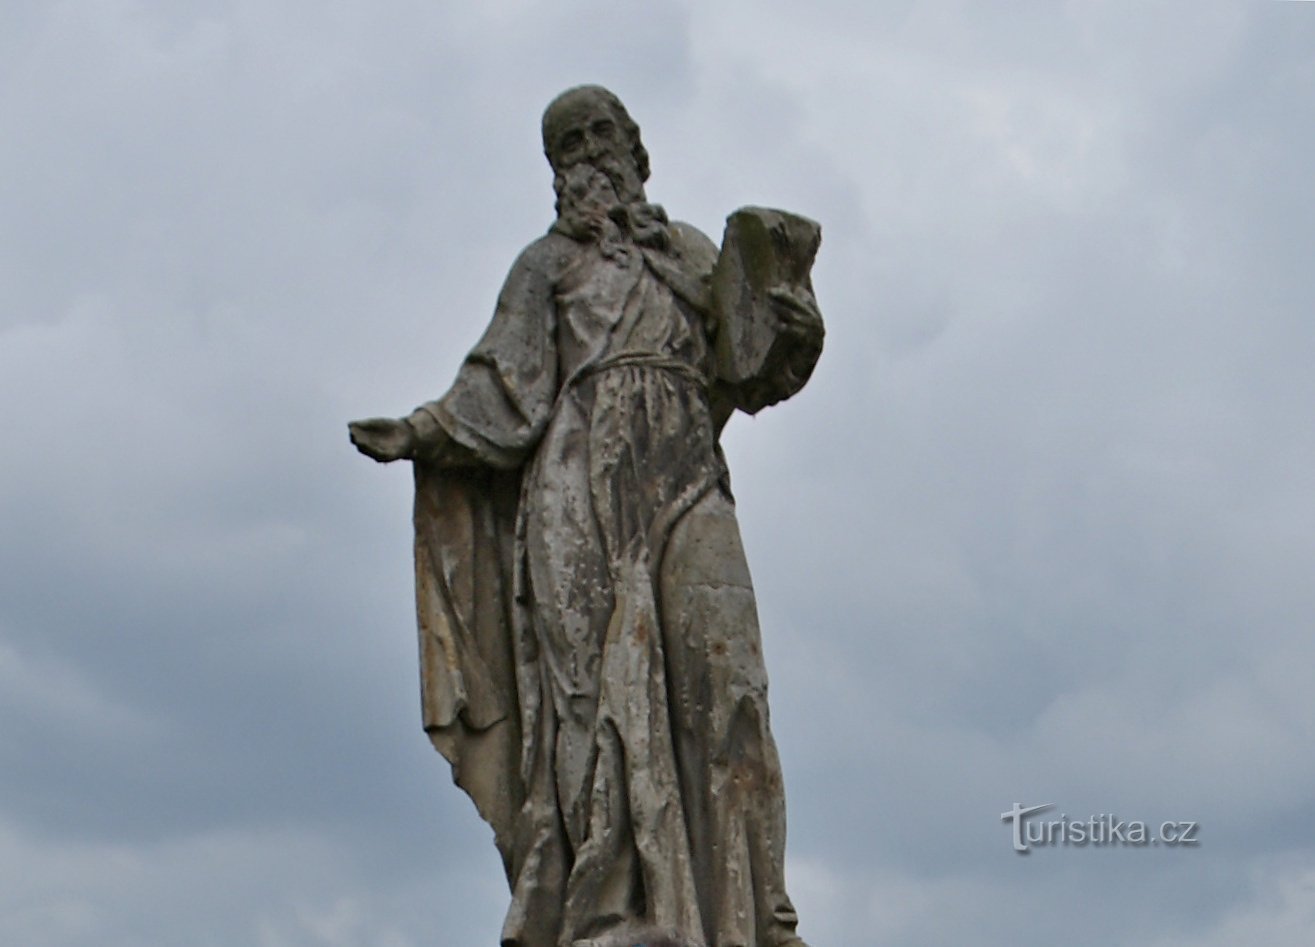 Blatec (nära Olomouc) - staty av St. Linhart